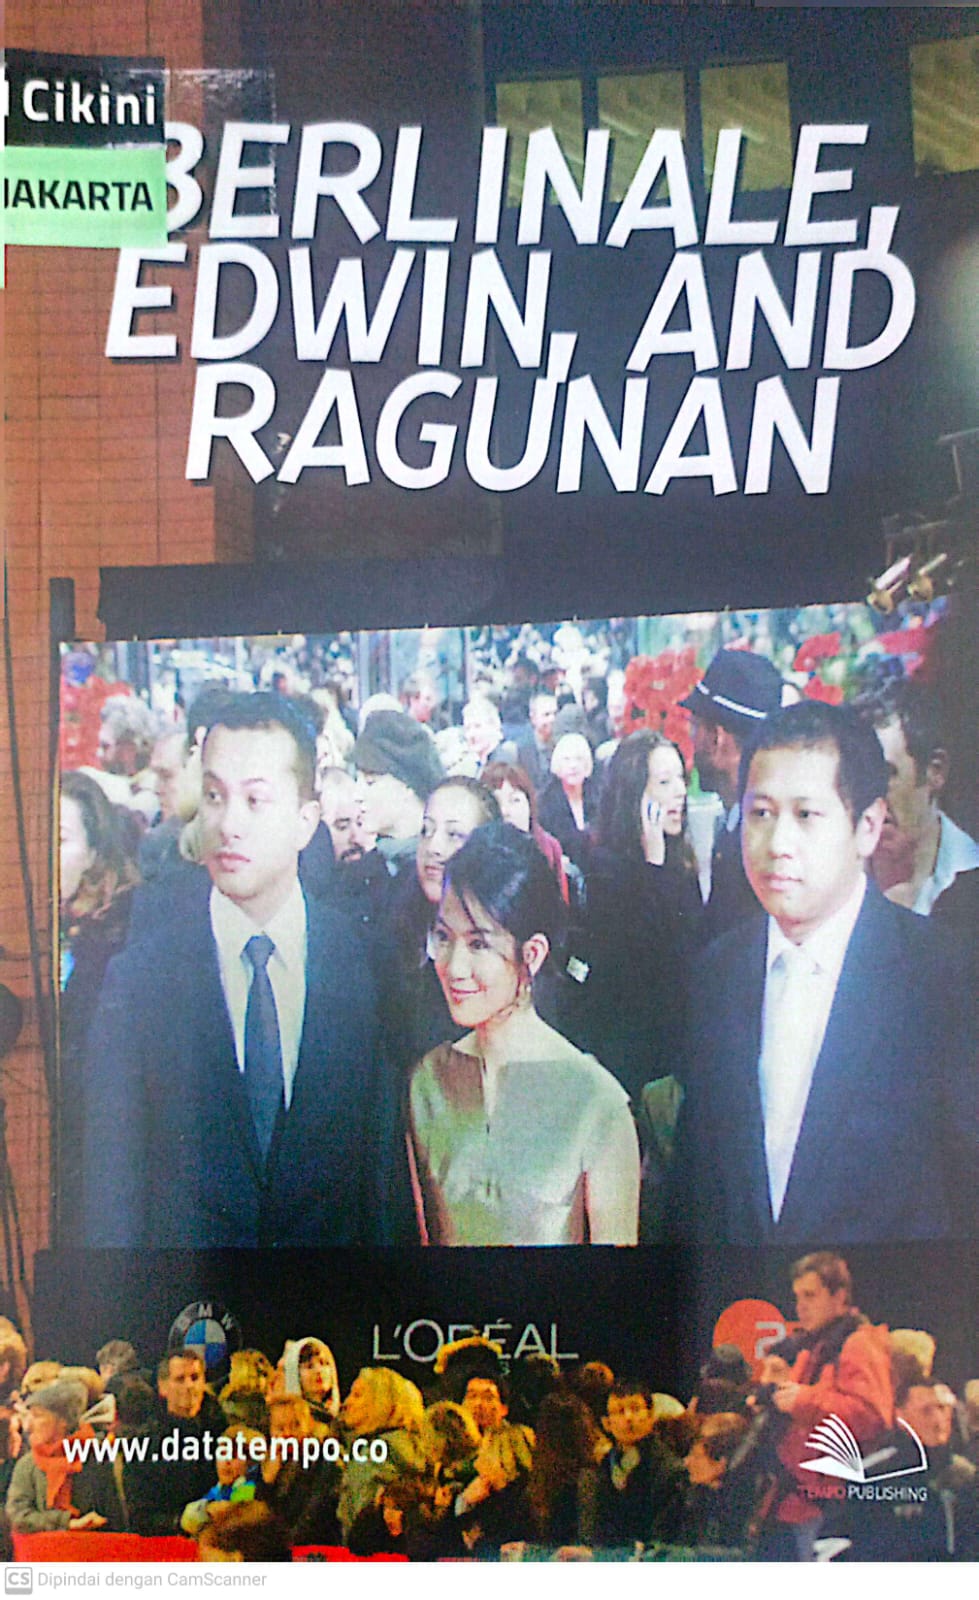 Berlinale, edwin, and ragunan